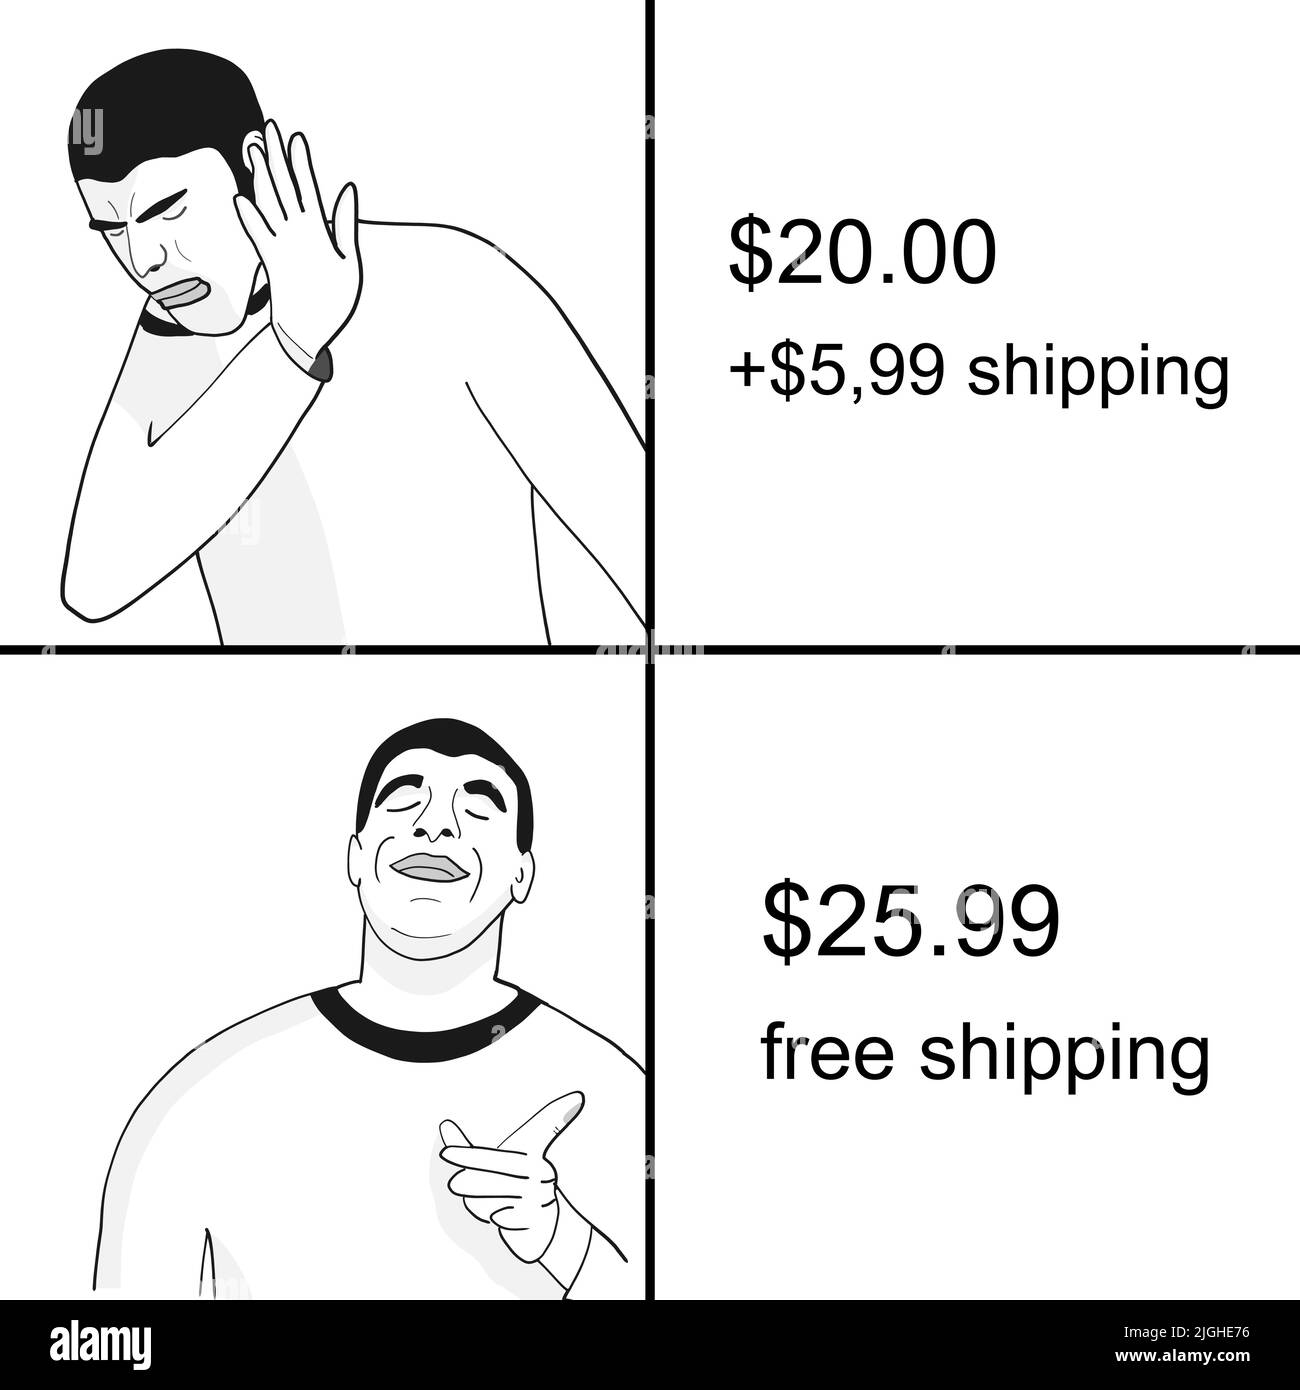 Free shipping vs paid shipping. Funny meme for social media sharing. Stock Vector